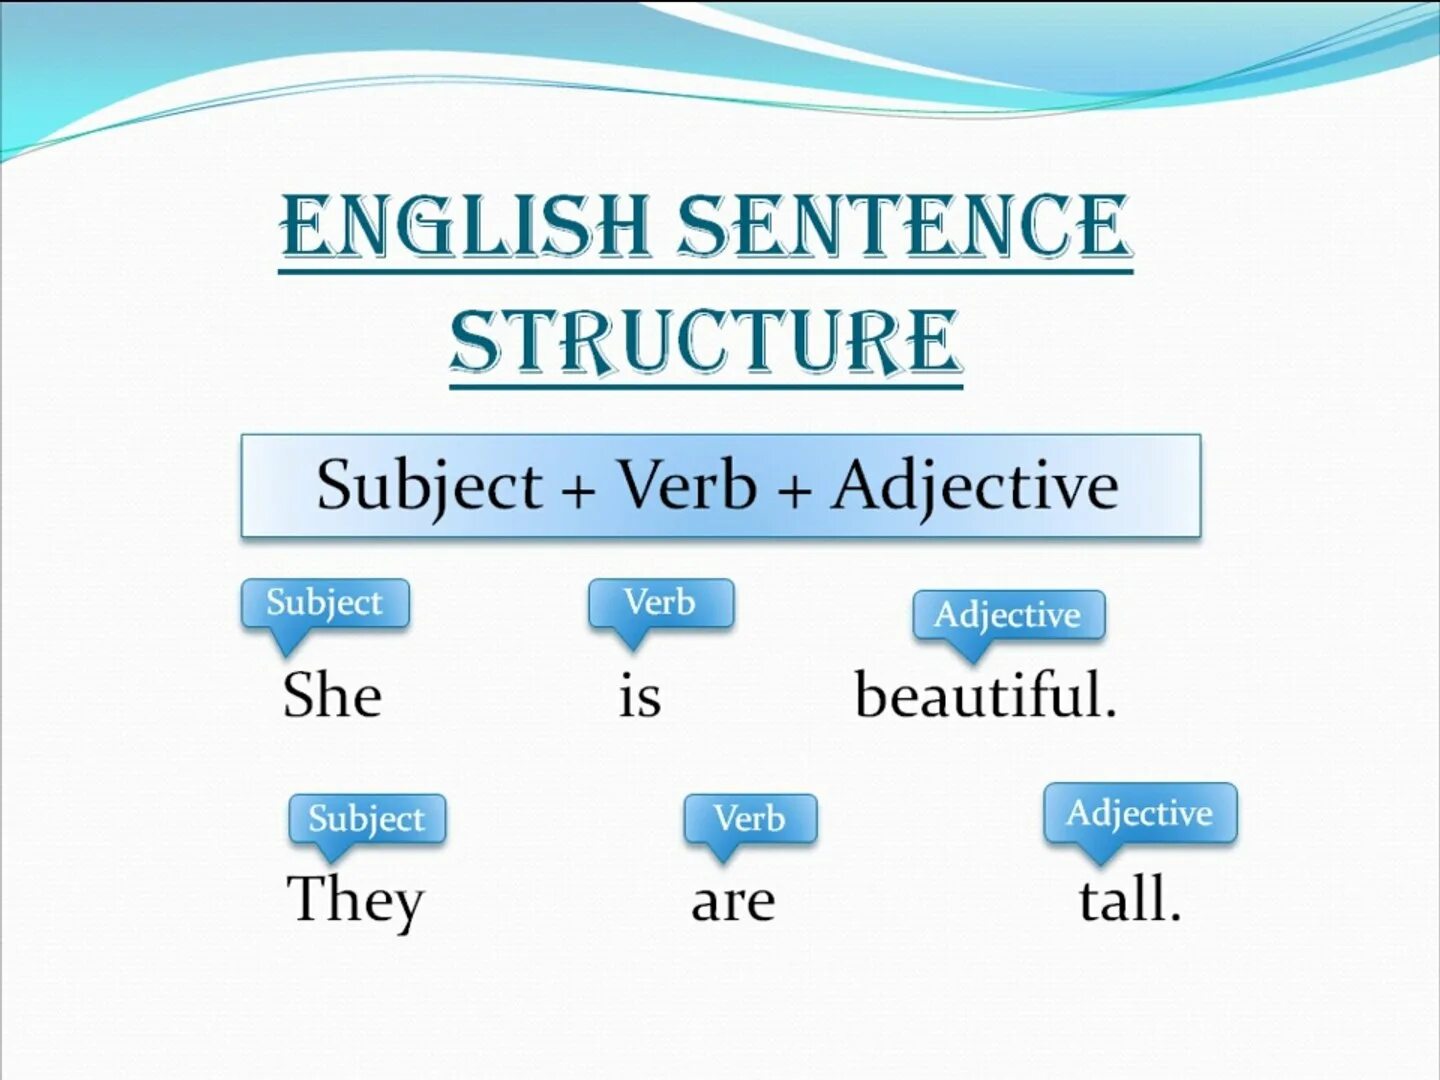 Sentence structure in English. Grammar sentence structure. Basic sentence structure in English. English sentences в английском.